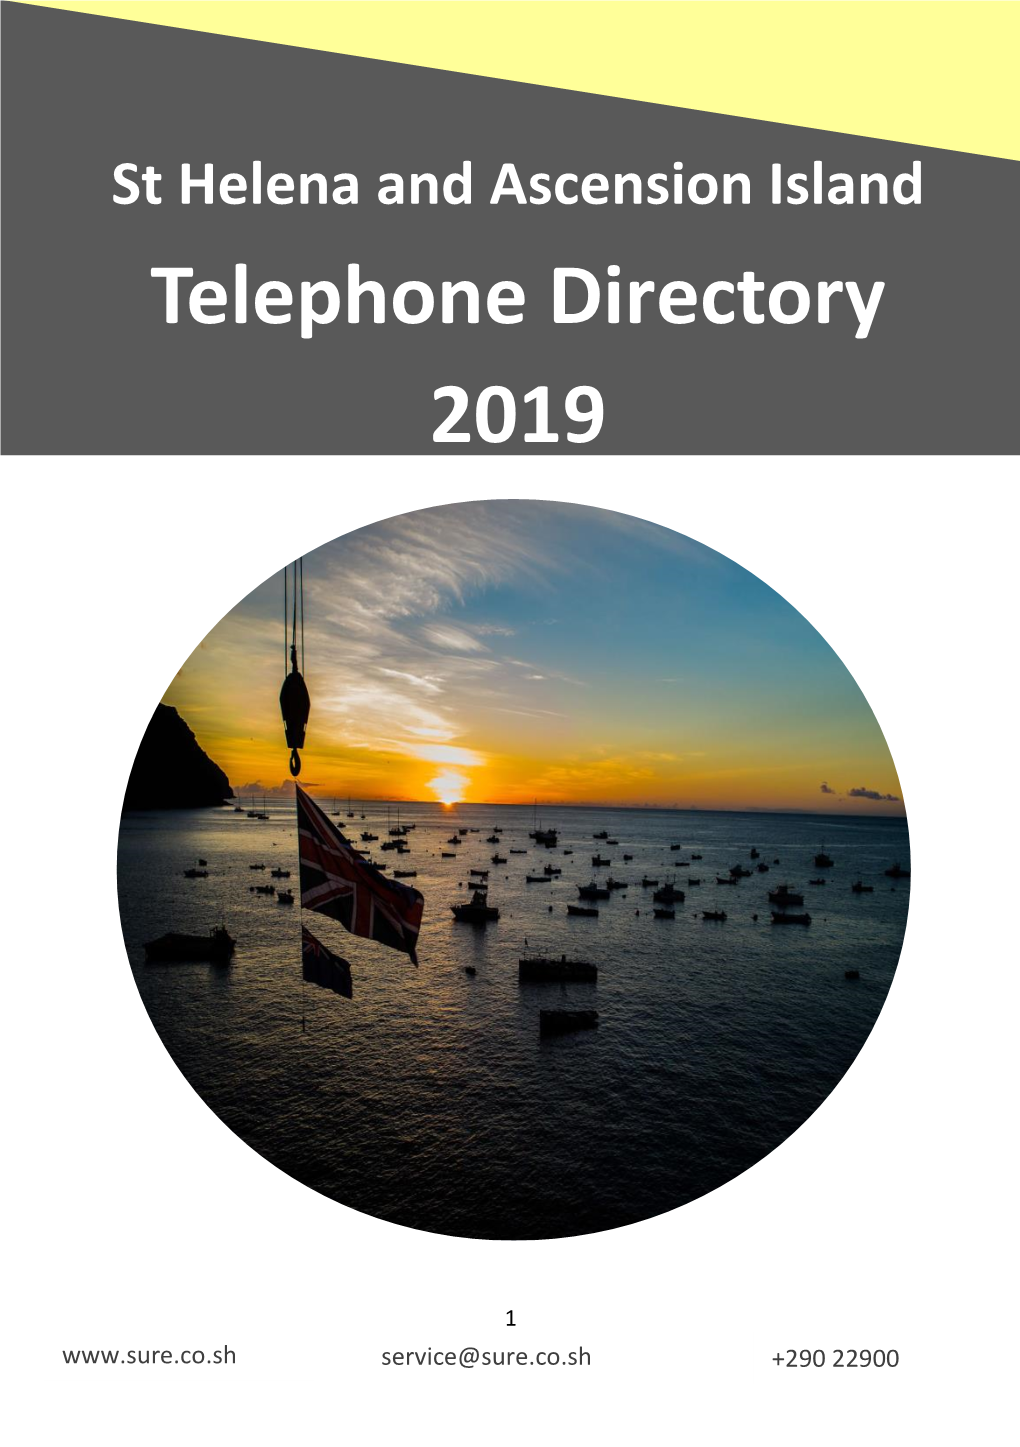 Telephone Directory 2019